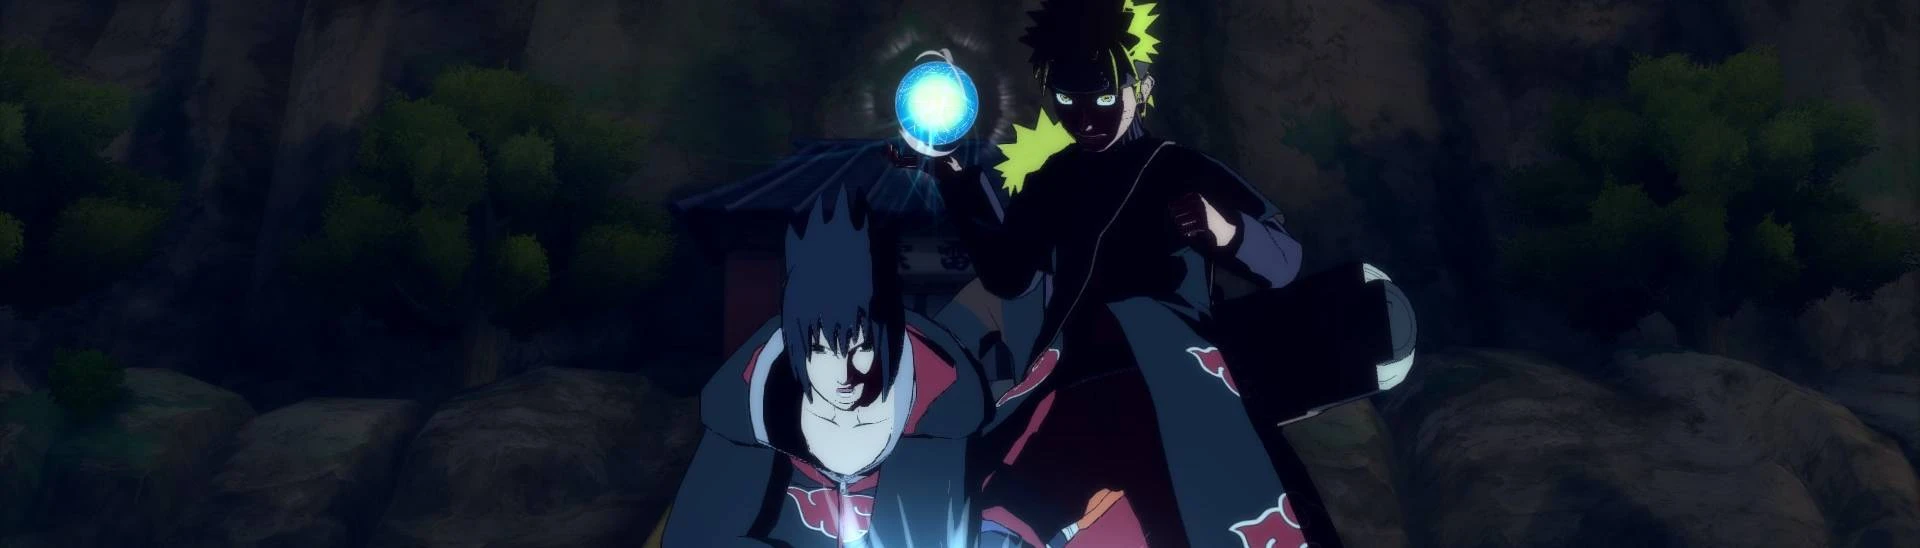 NEW Enemy?! Akatsuki Leads an Attack! IceeRamen Naruto Anime Mod